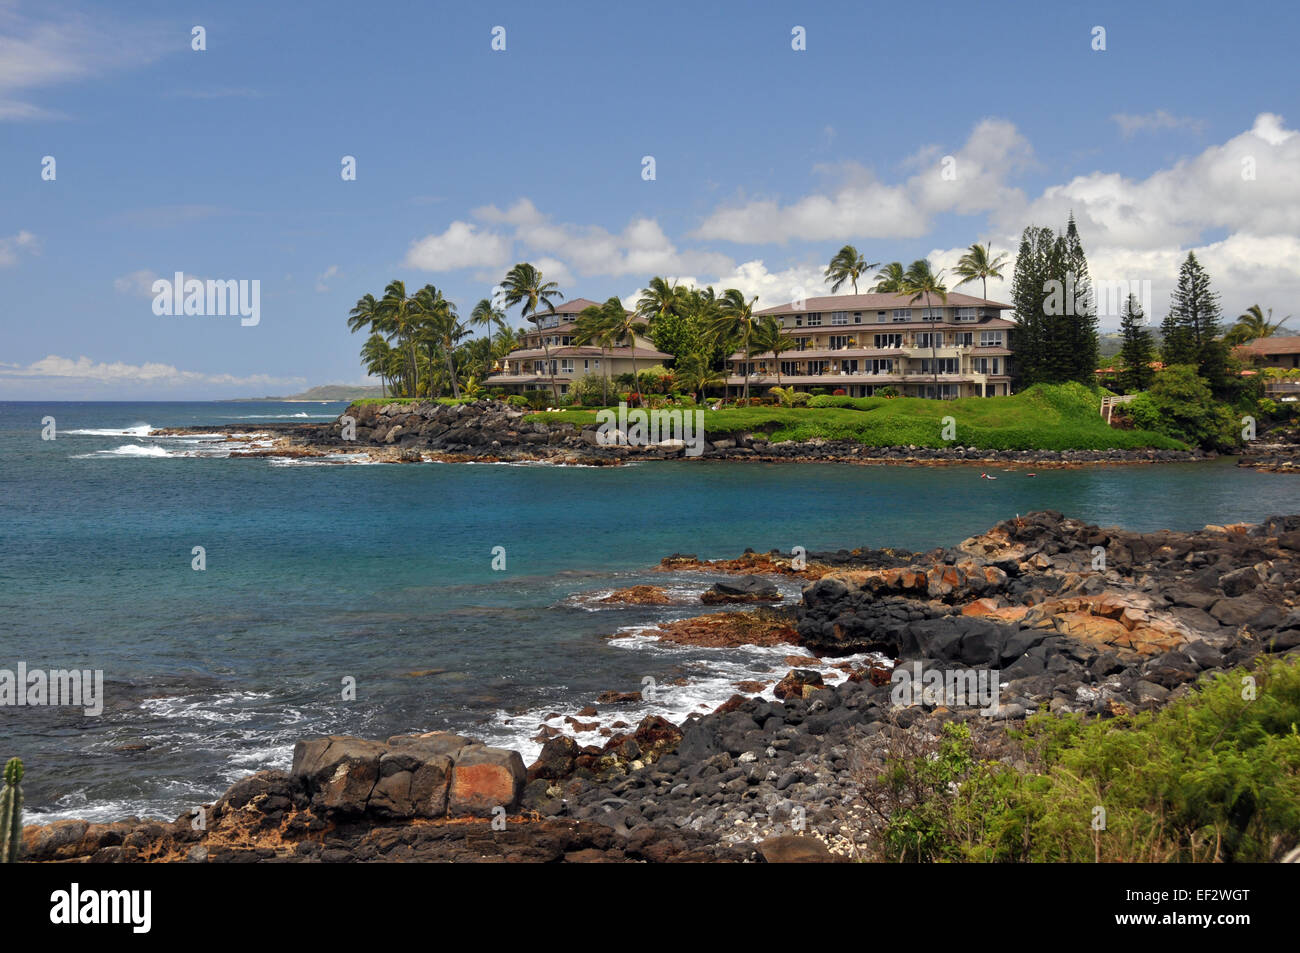 Whalers cove resort at Hanakaape Bay, Kauai. Hawaii, USA Stock Photo